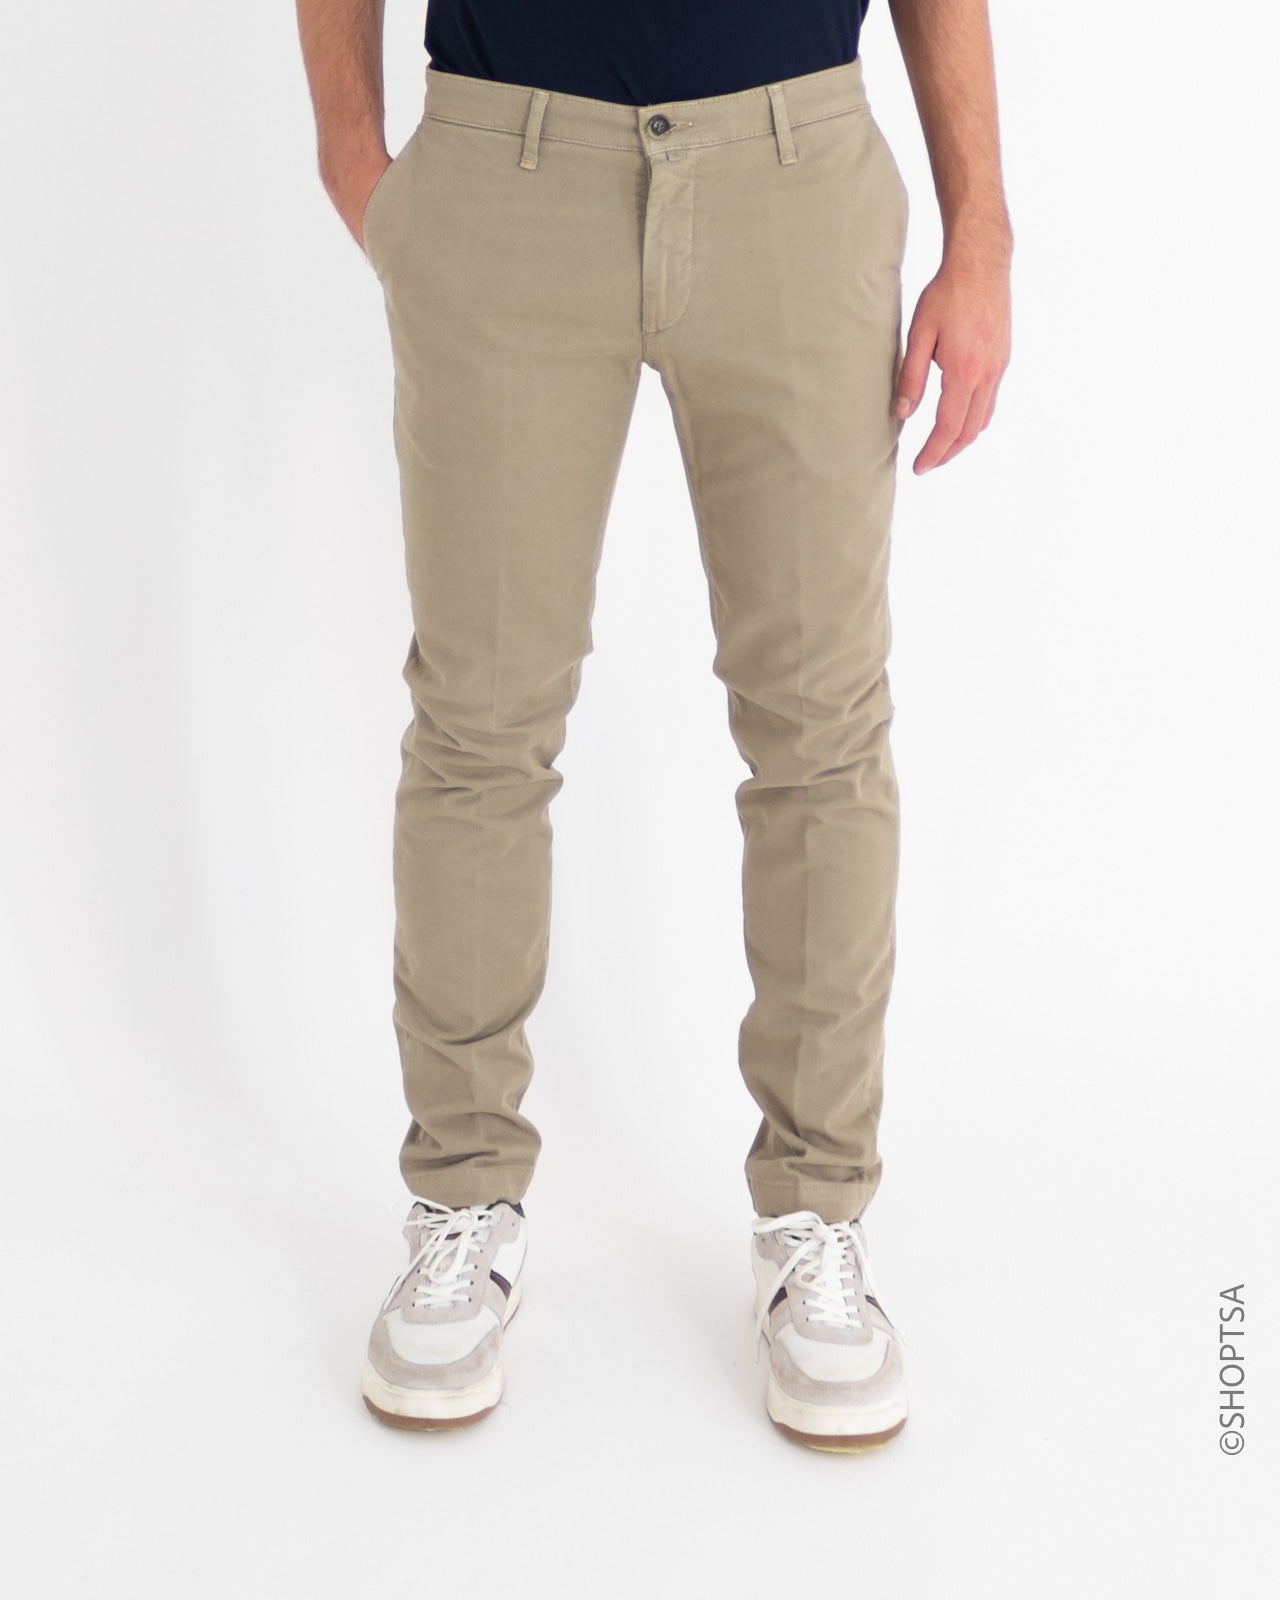 Cliver Jeans cotton trousers